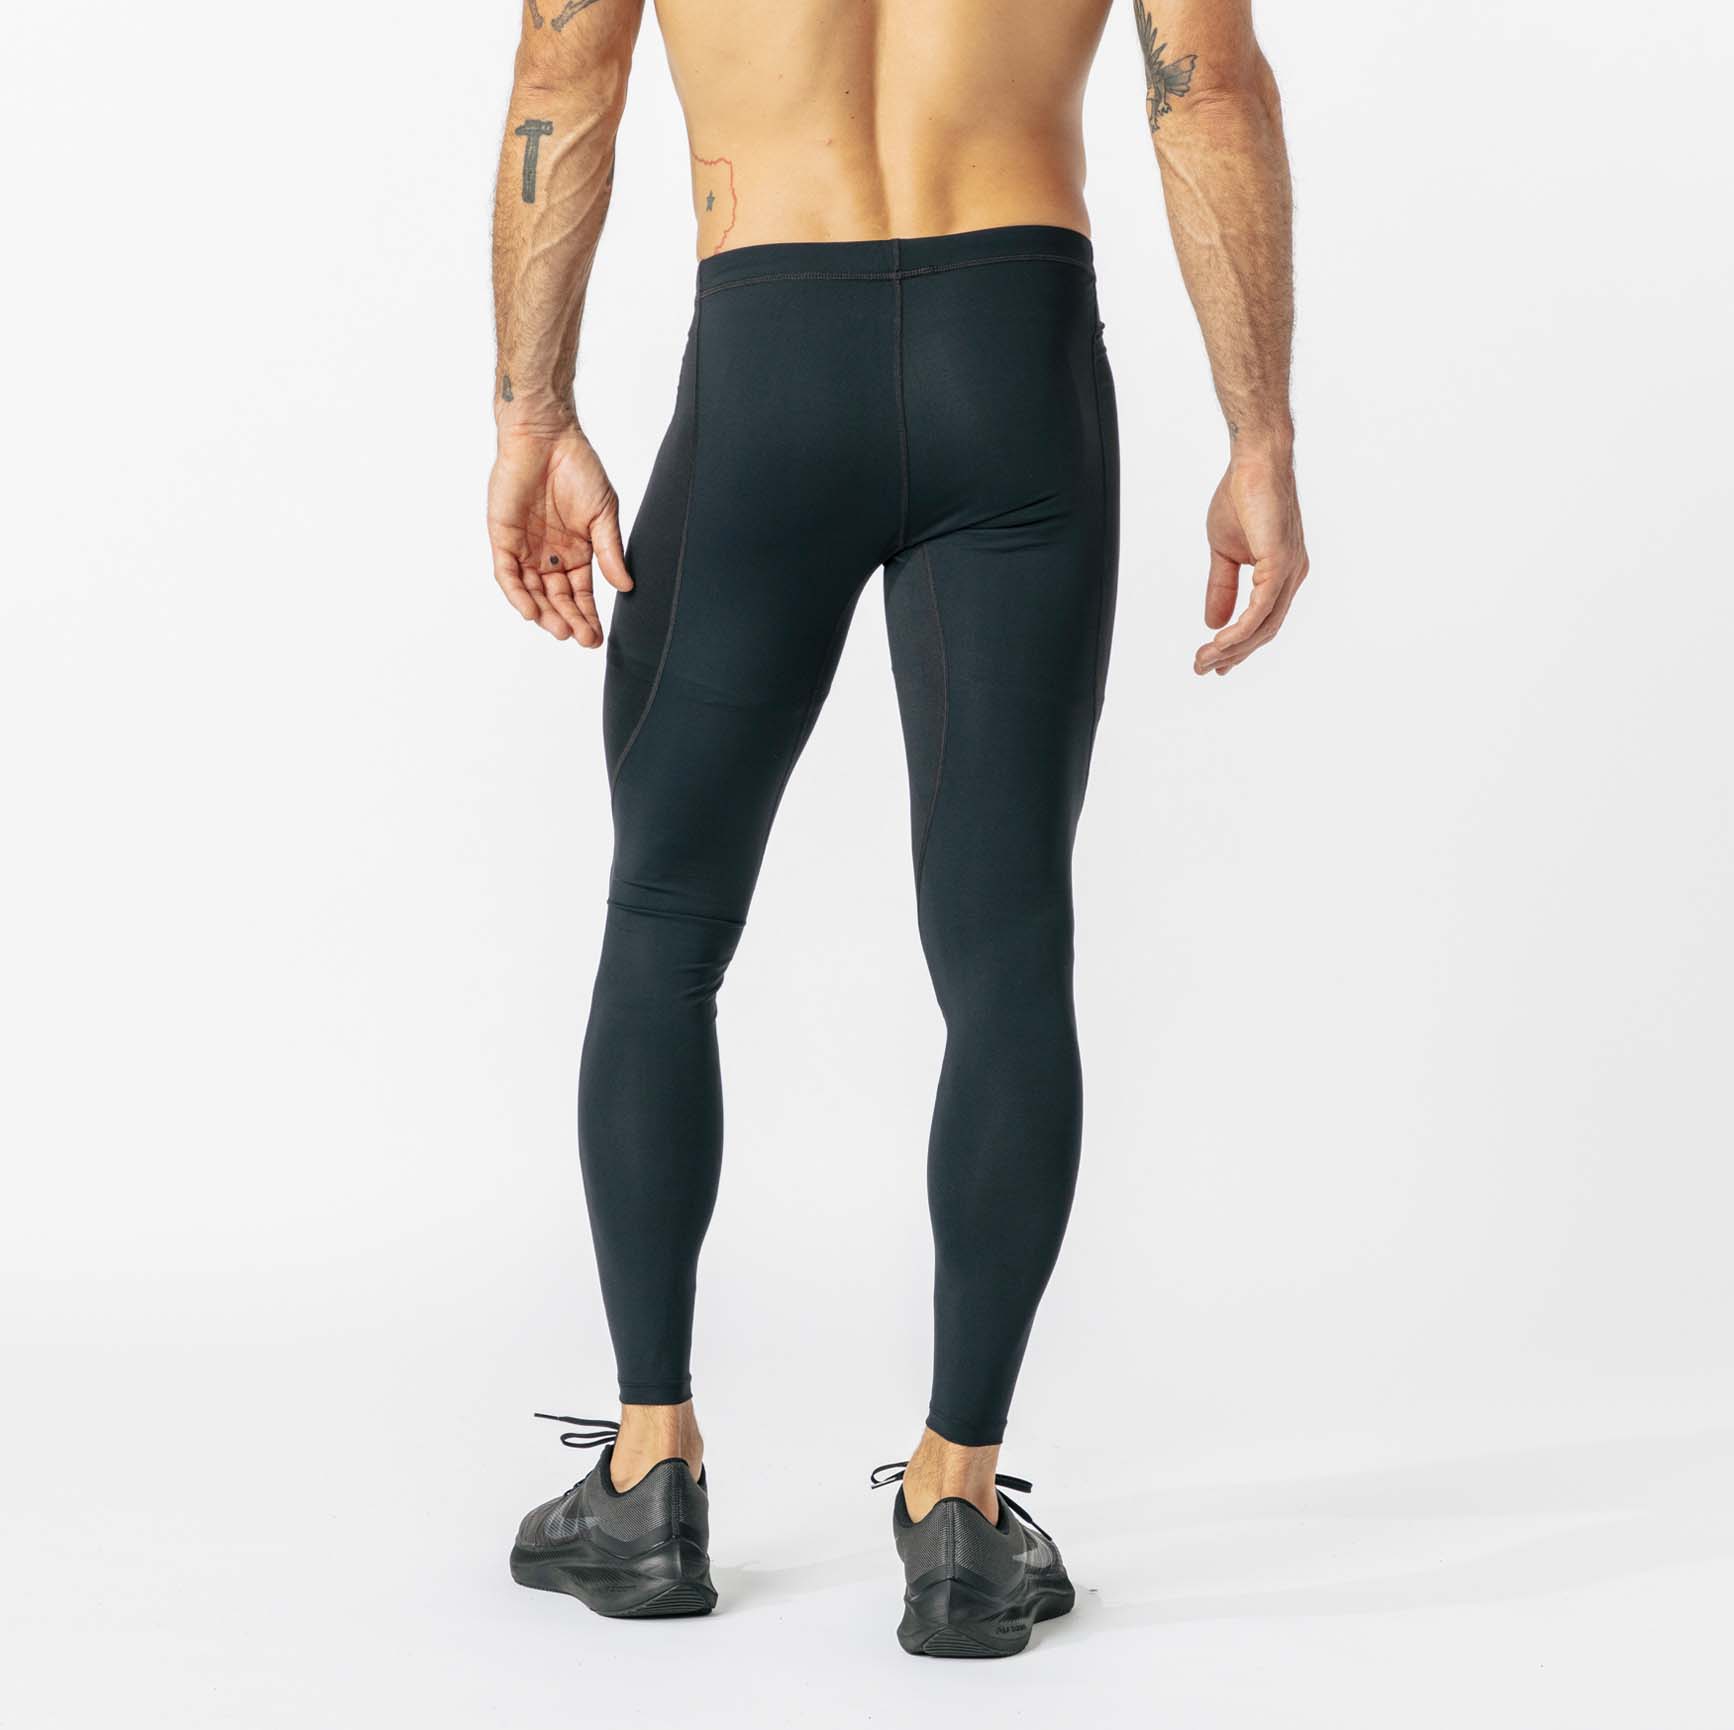 Long Johns Long Underwear Compression Pants Leggings Tights Pockets Sports  Pants,black,xl